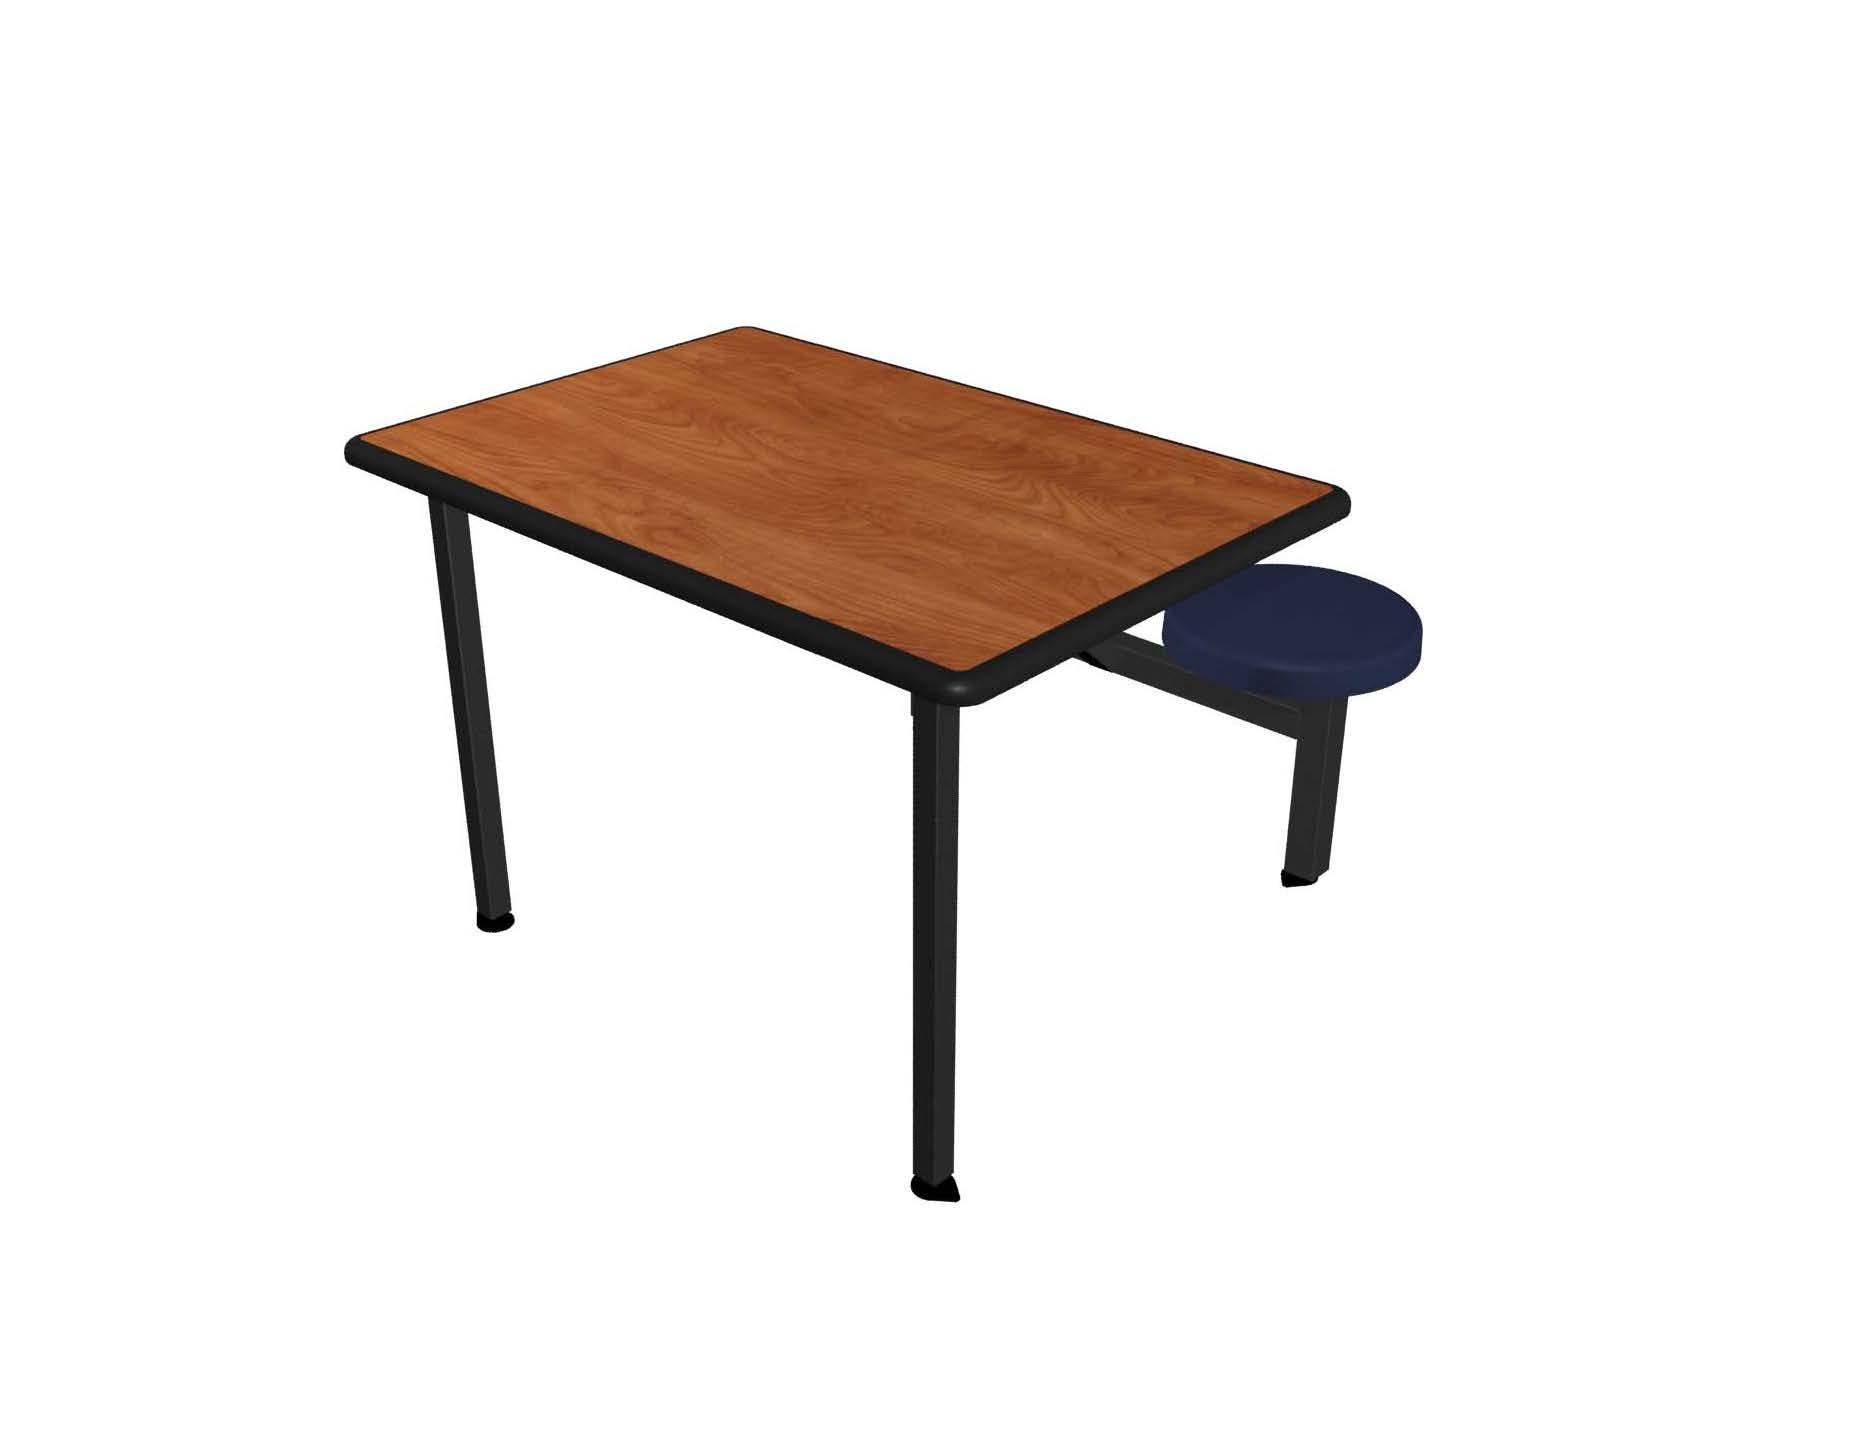 Wild Cherry laminate table top, Black Dur-A-Edge®, Navy composite button seat